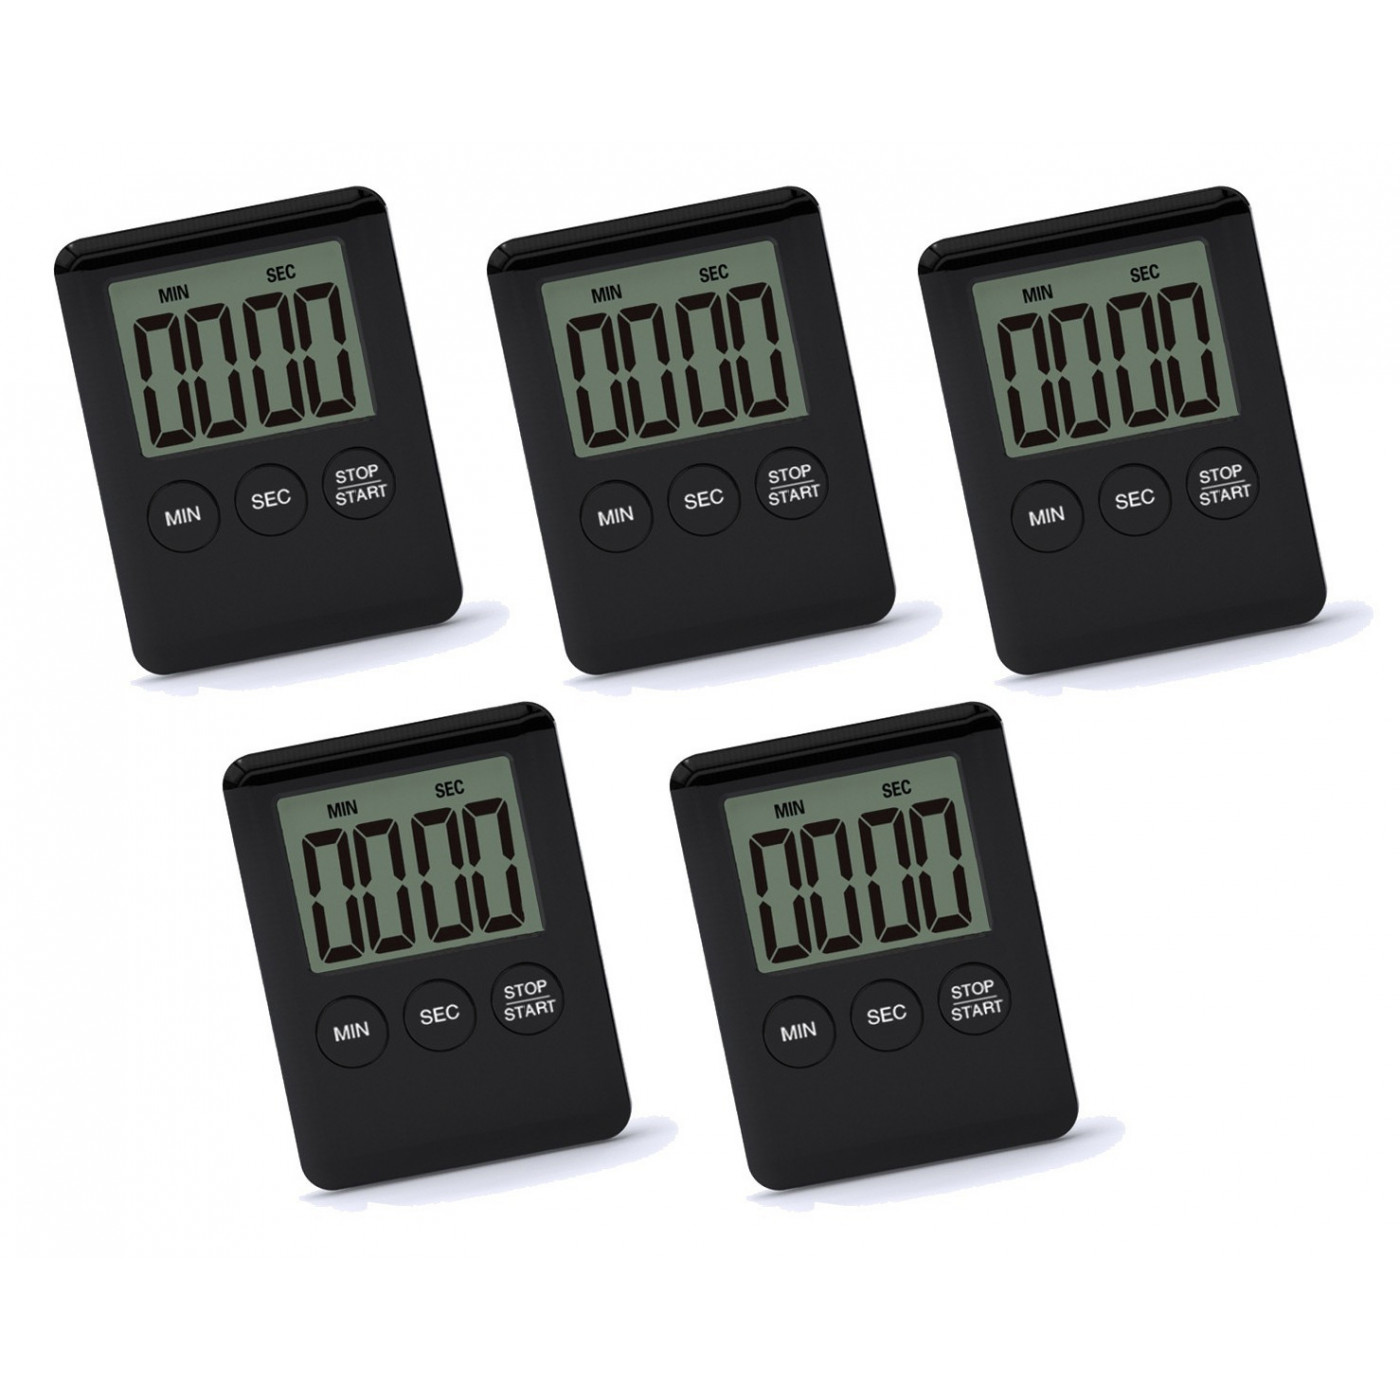 Set of 5 digital kitchen timers, alarm clocks, purple - Wood, Tools & Deco